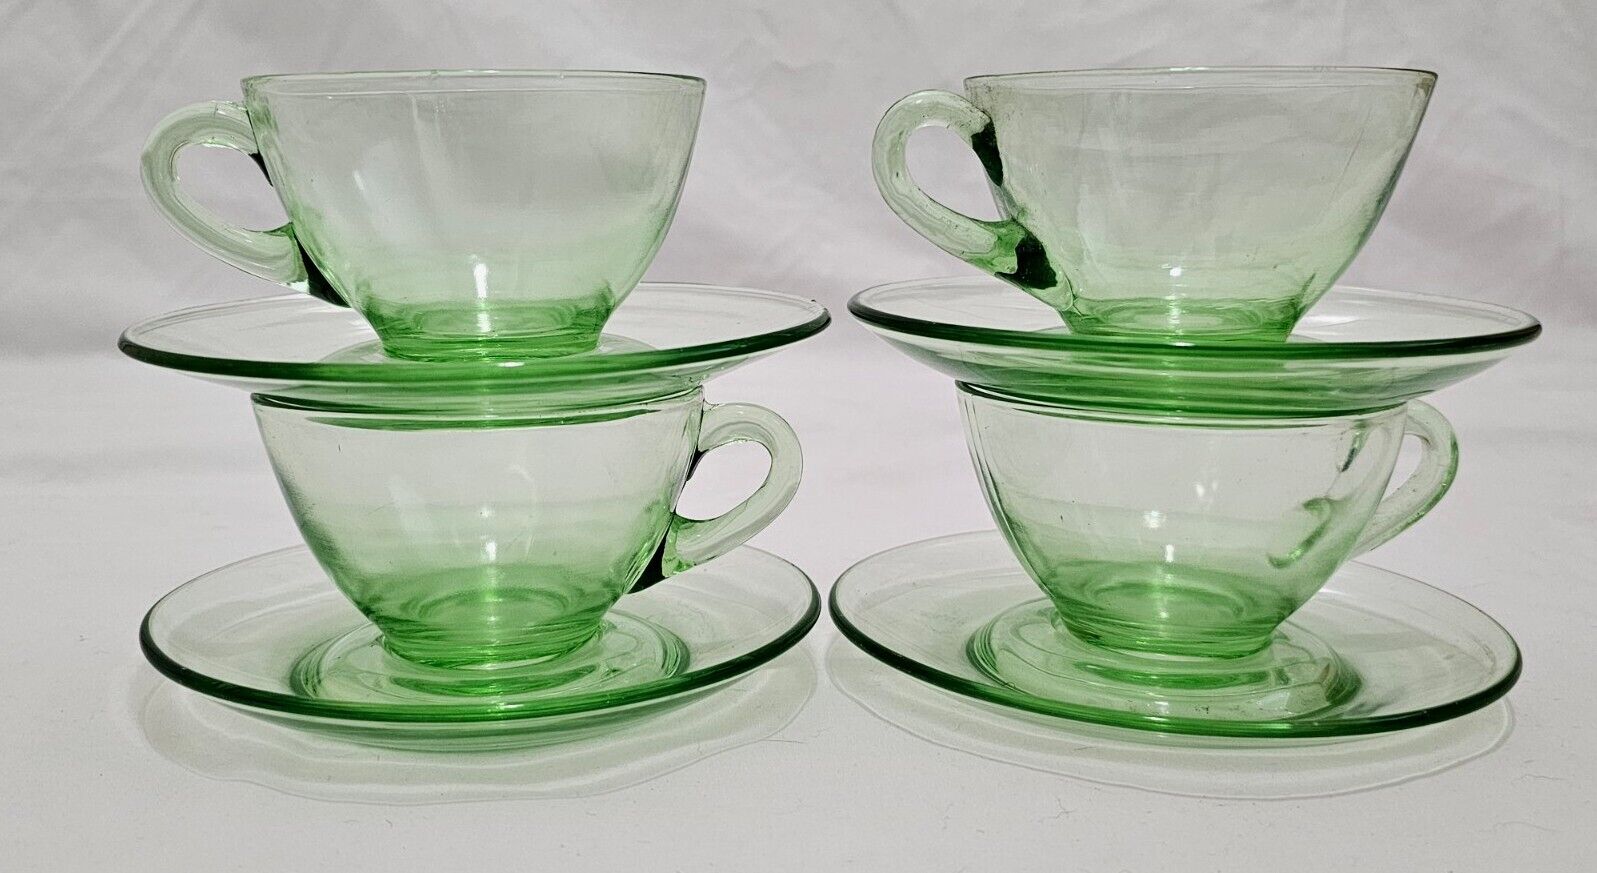 1930’s Depression Glass Pioneer Light Green Fostoria Teacup Saucer - Set of 4